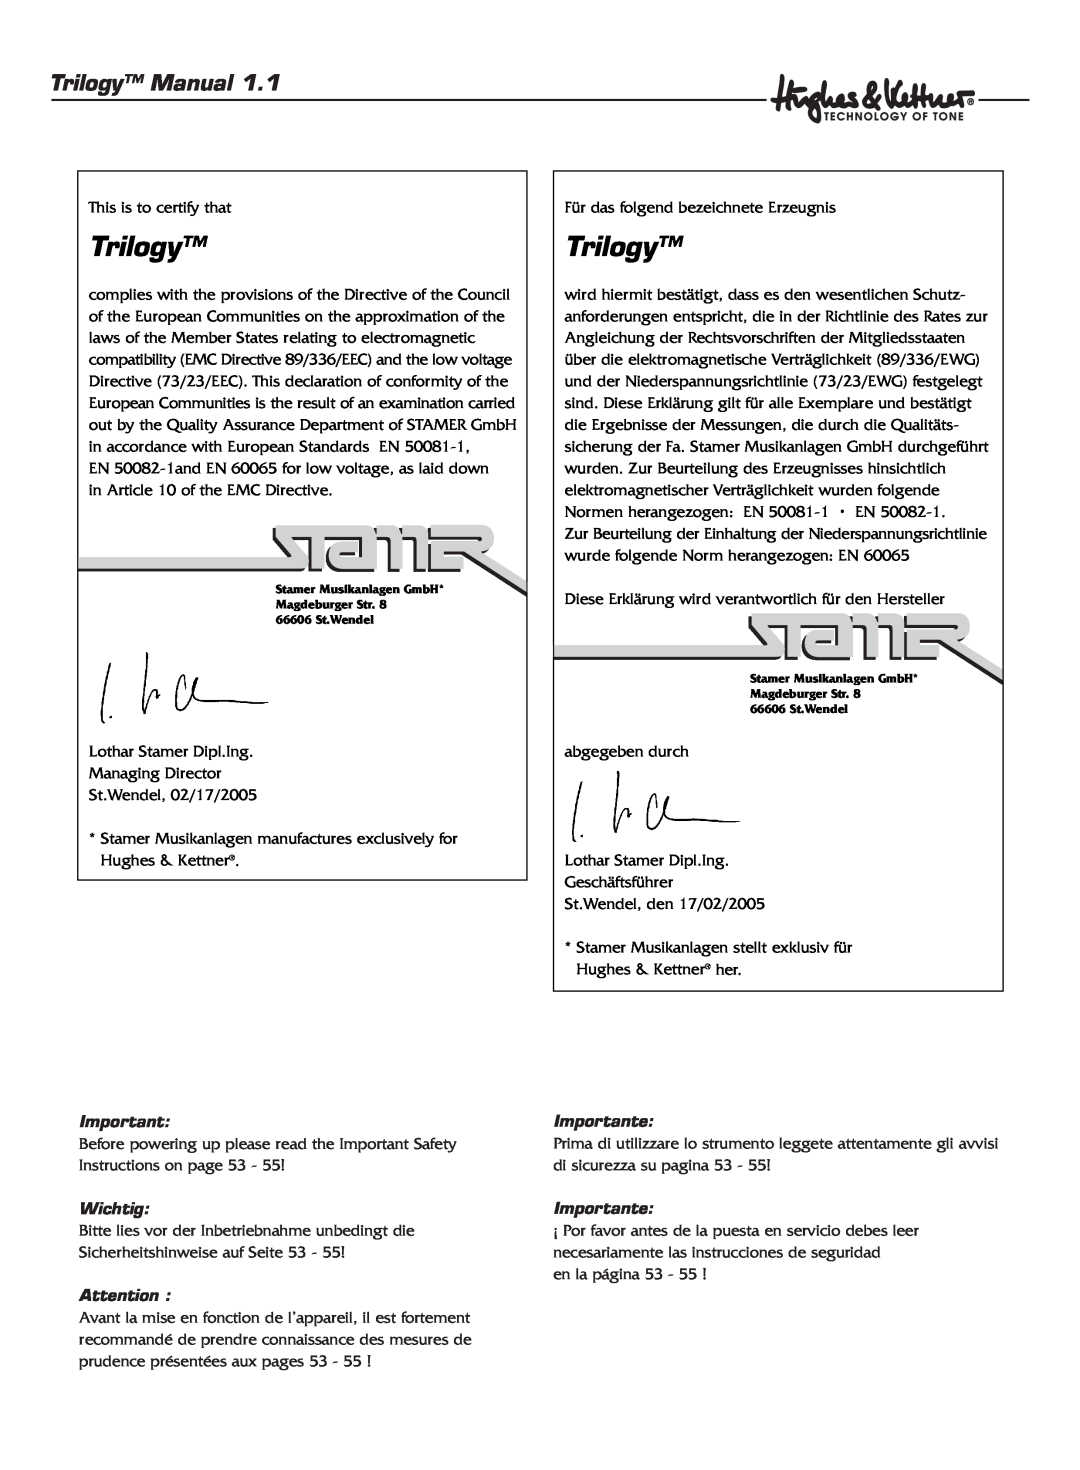 Hughes & Kettner TrilogyTM manual Trilogy Manual, Wichtig, Importante 